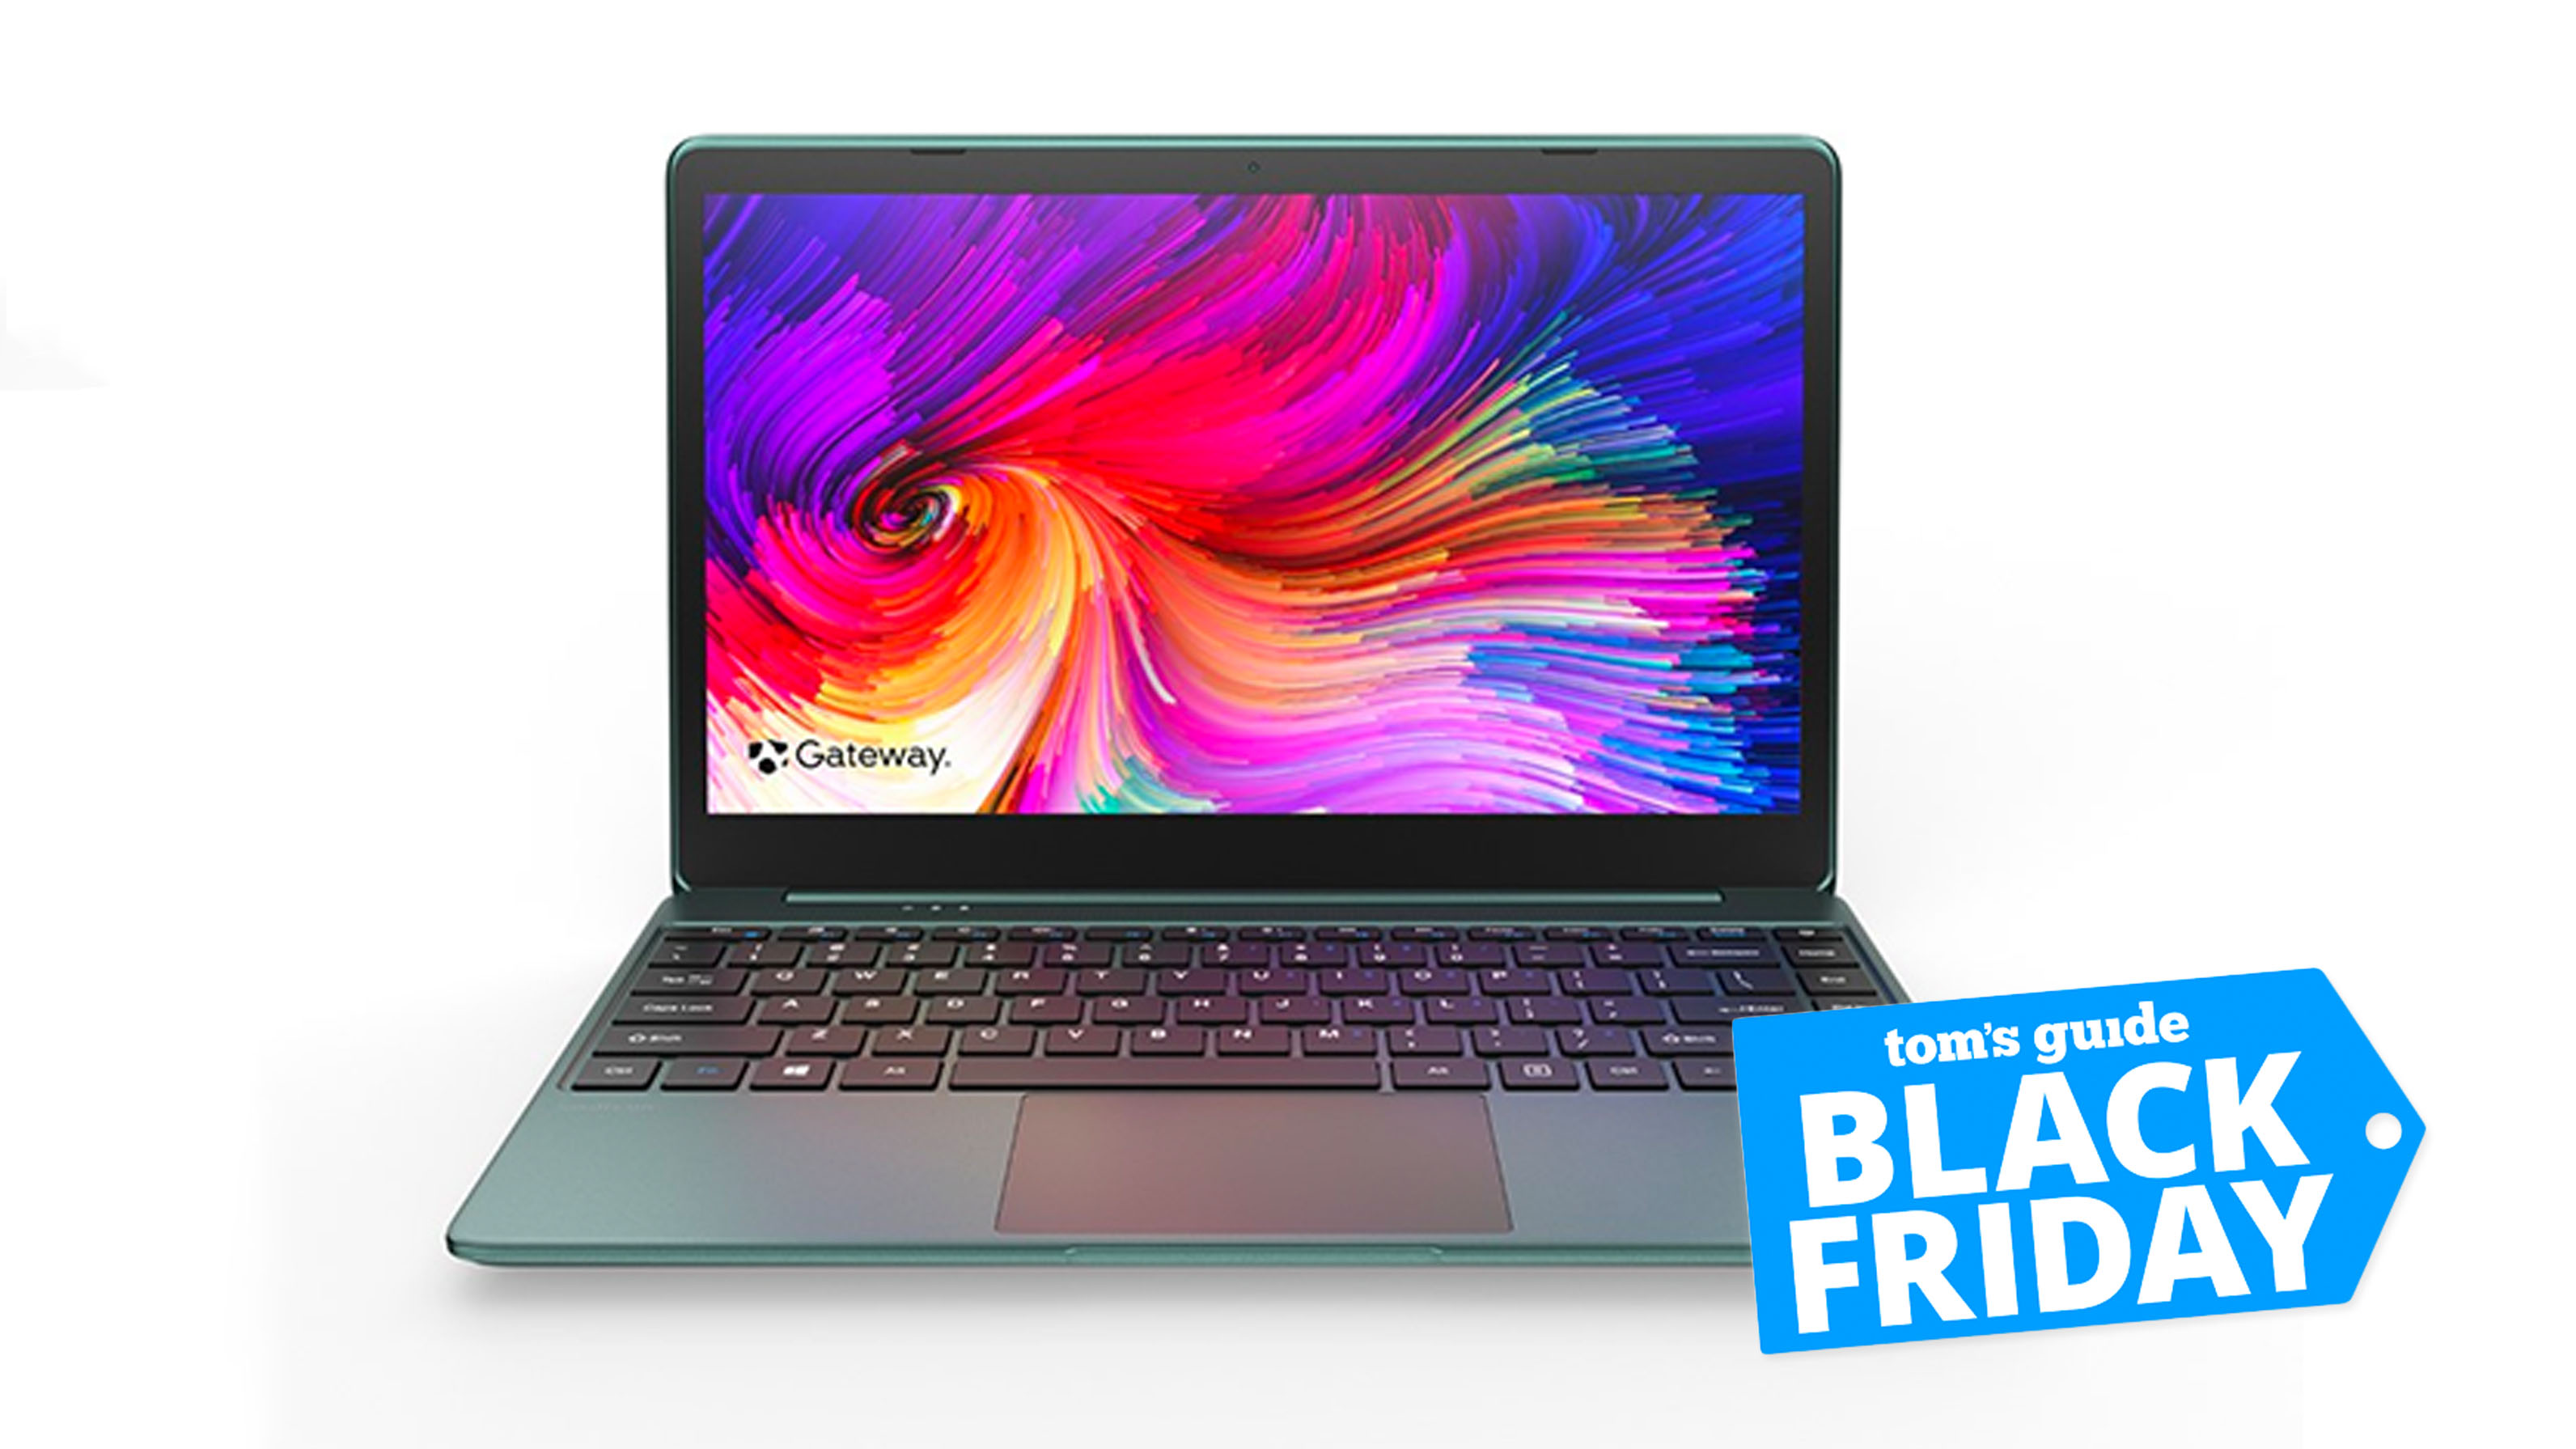 Gateway laptop Black Friday deal